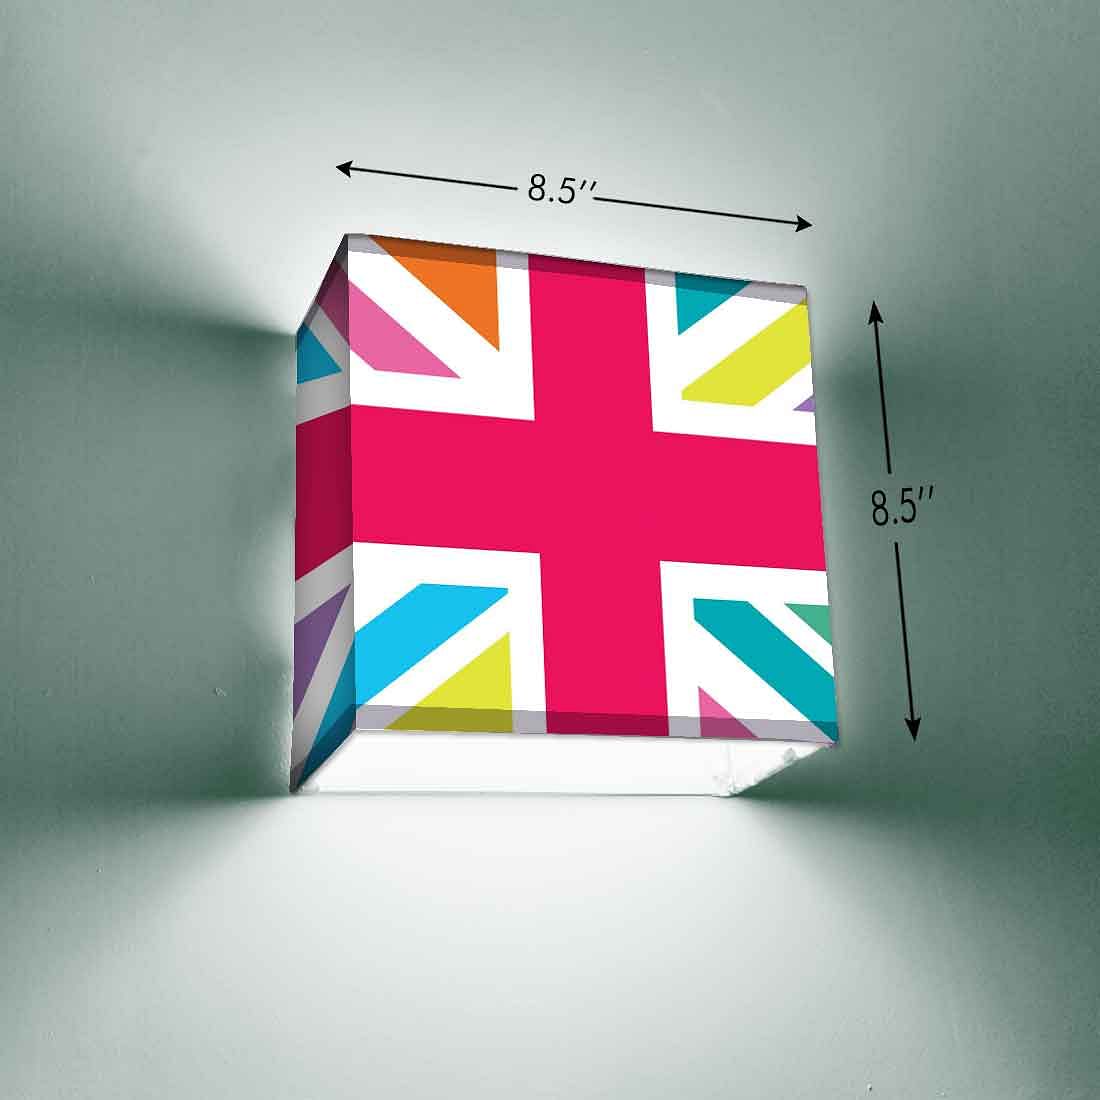 Fancy DrawingRoom Wall Lamp - Multicolor Union Jack British Flag Nutcase